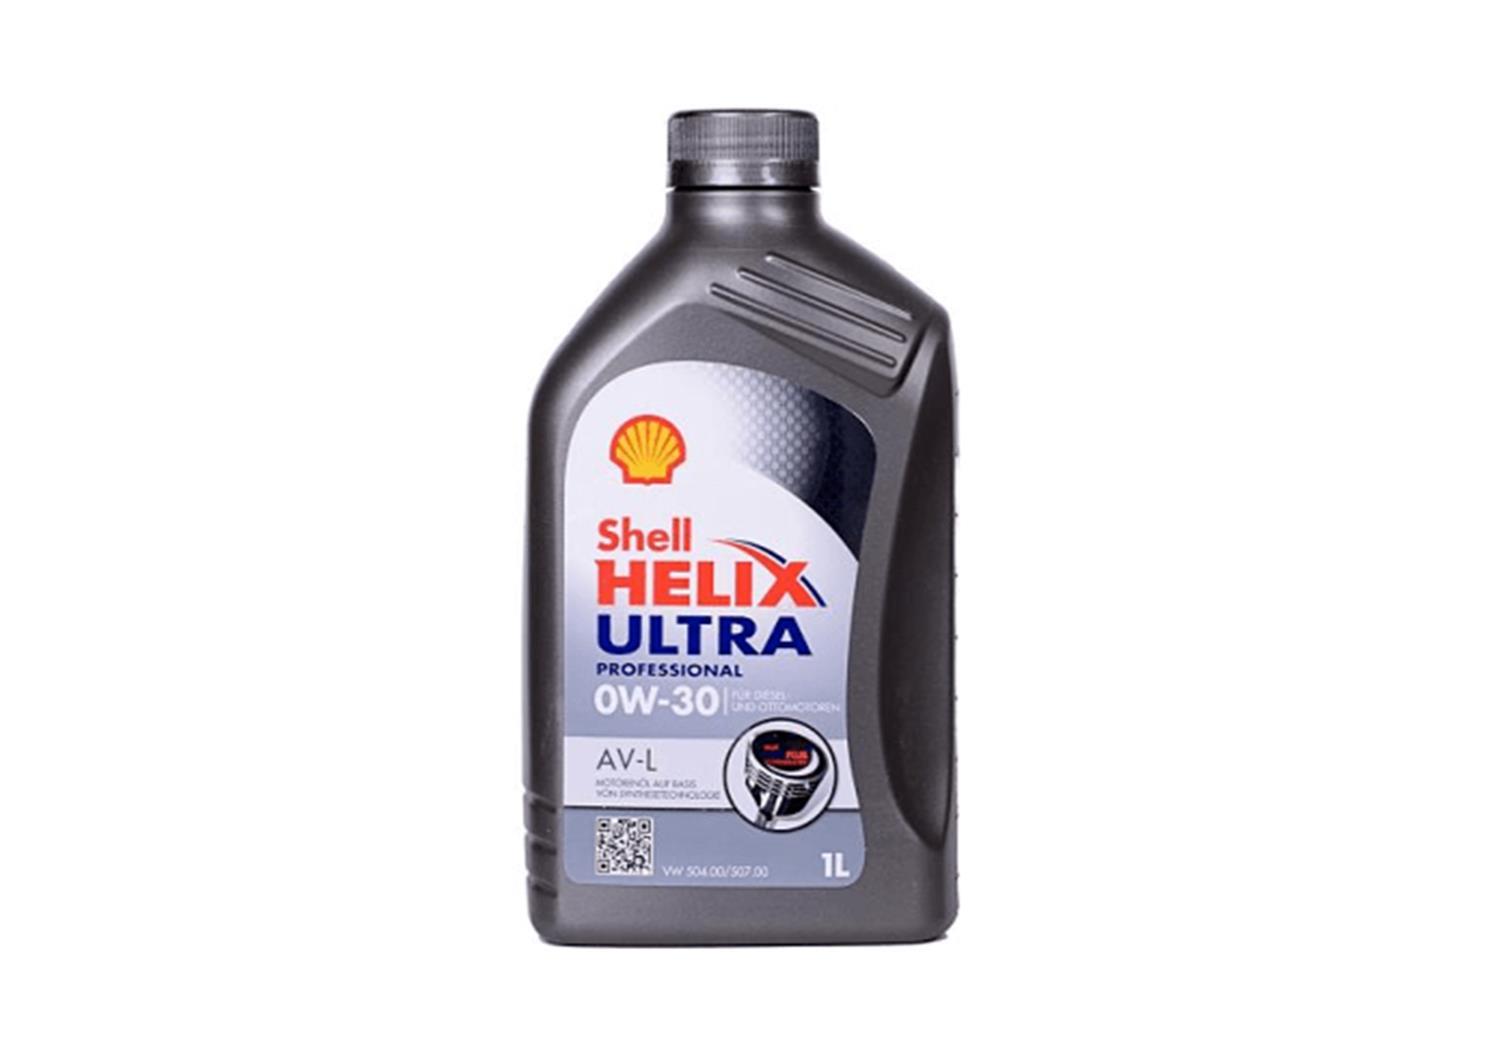 Ultra professional av. Shell Helix Ultra 10w60 Racing. Helix Ultra 5w-30 1л. Shell Helix Ultra professional AG 5w-30 1l. Shell Helix Ultra 5w30 1л 550046267.